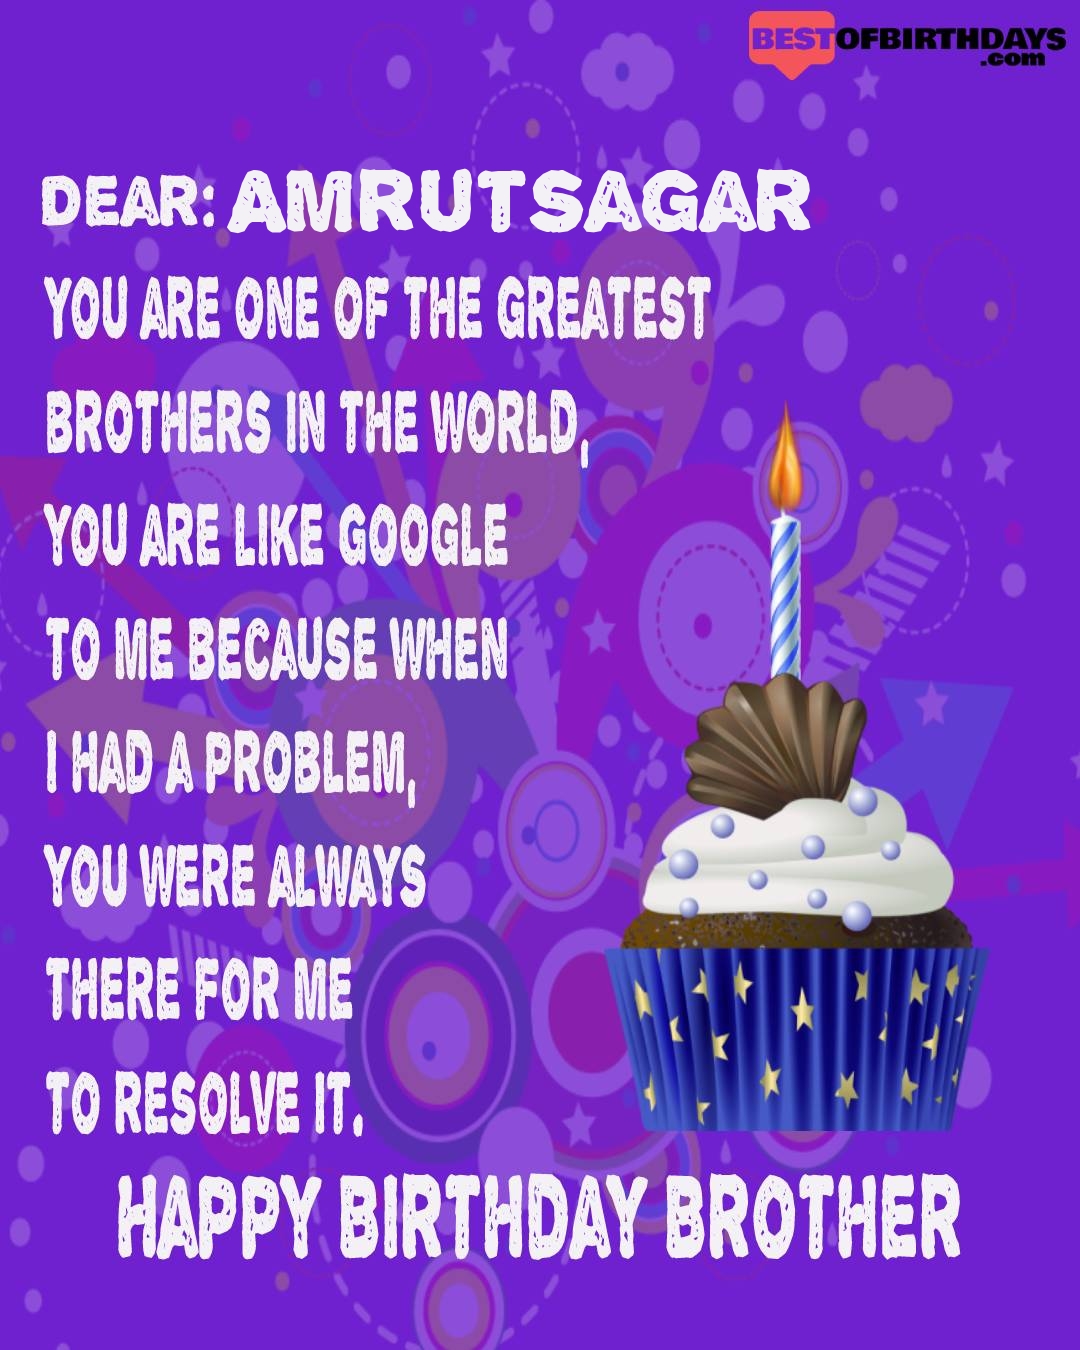 Happy birthday amrutsagar bhai brother bro